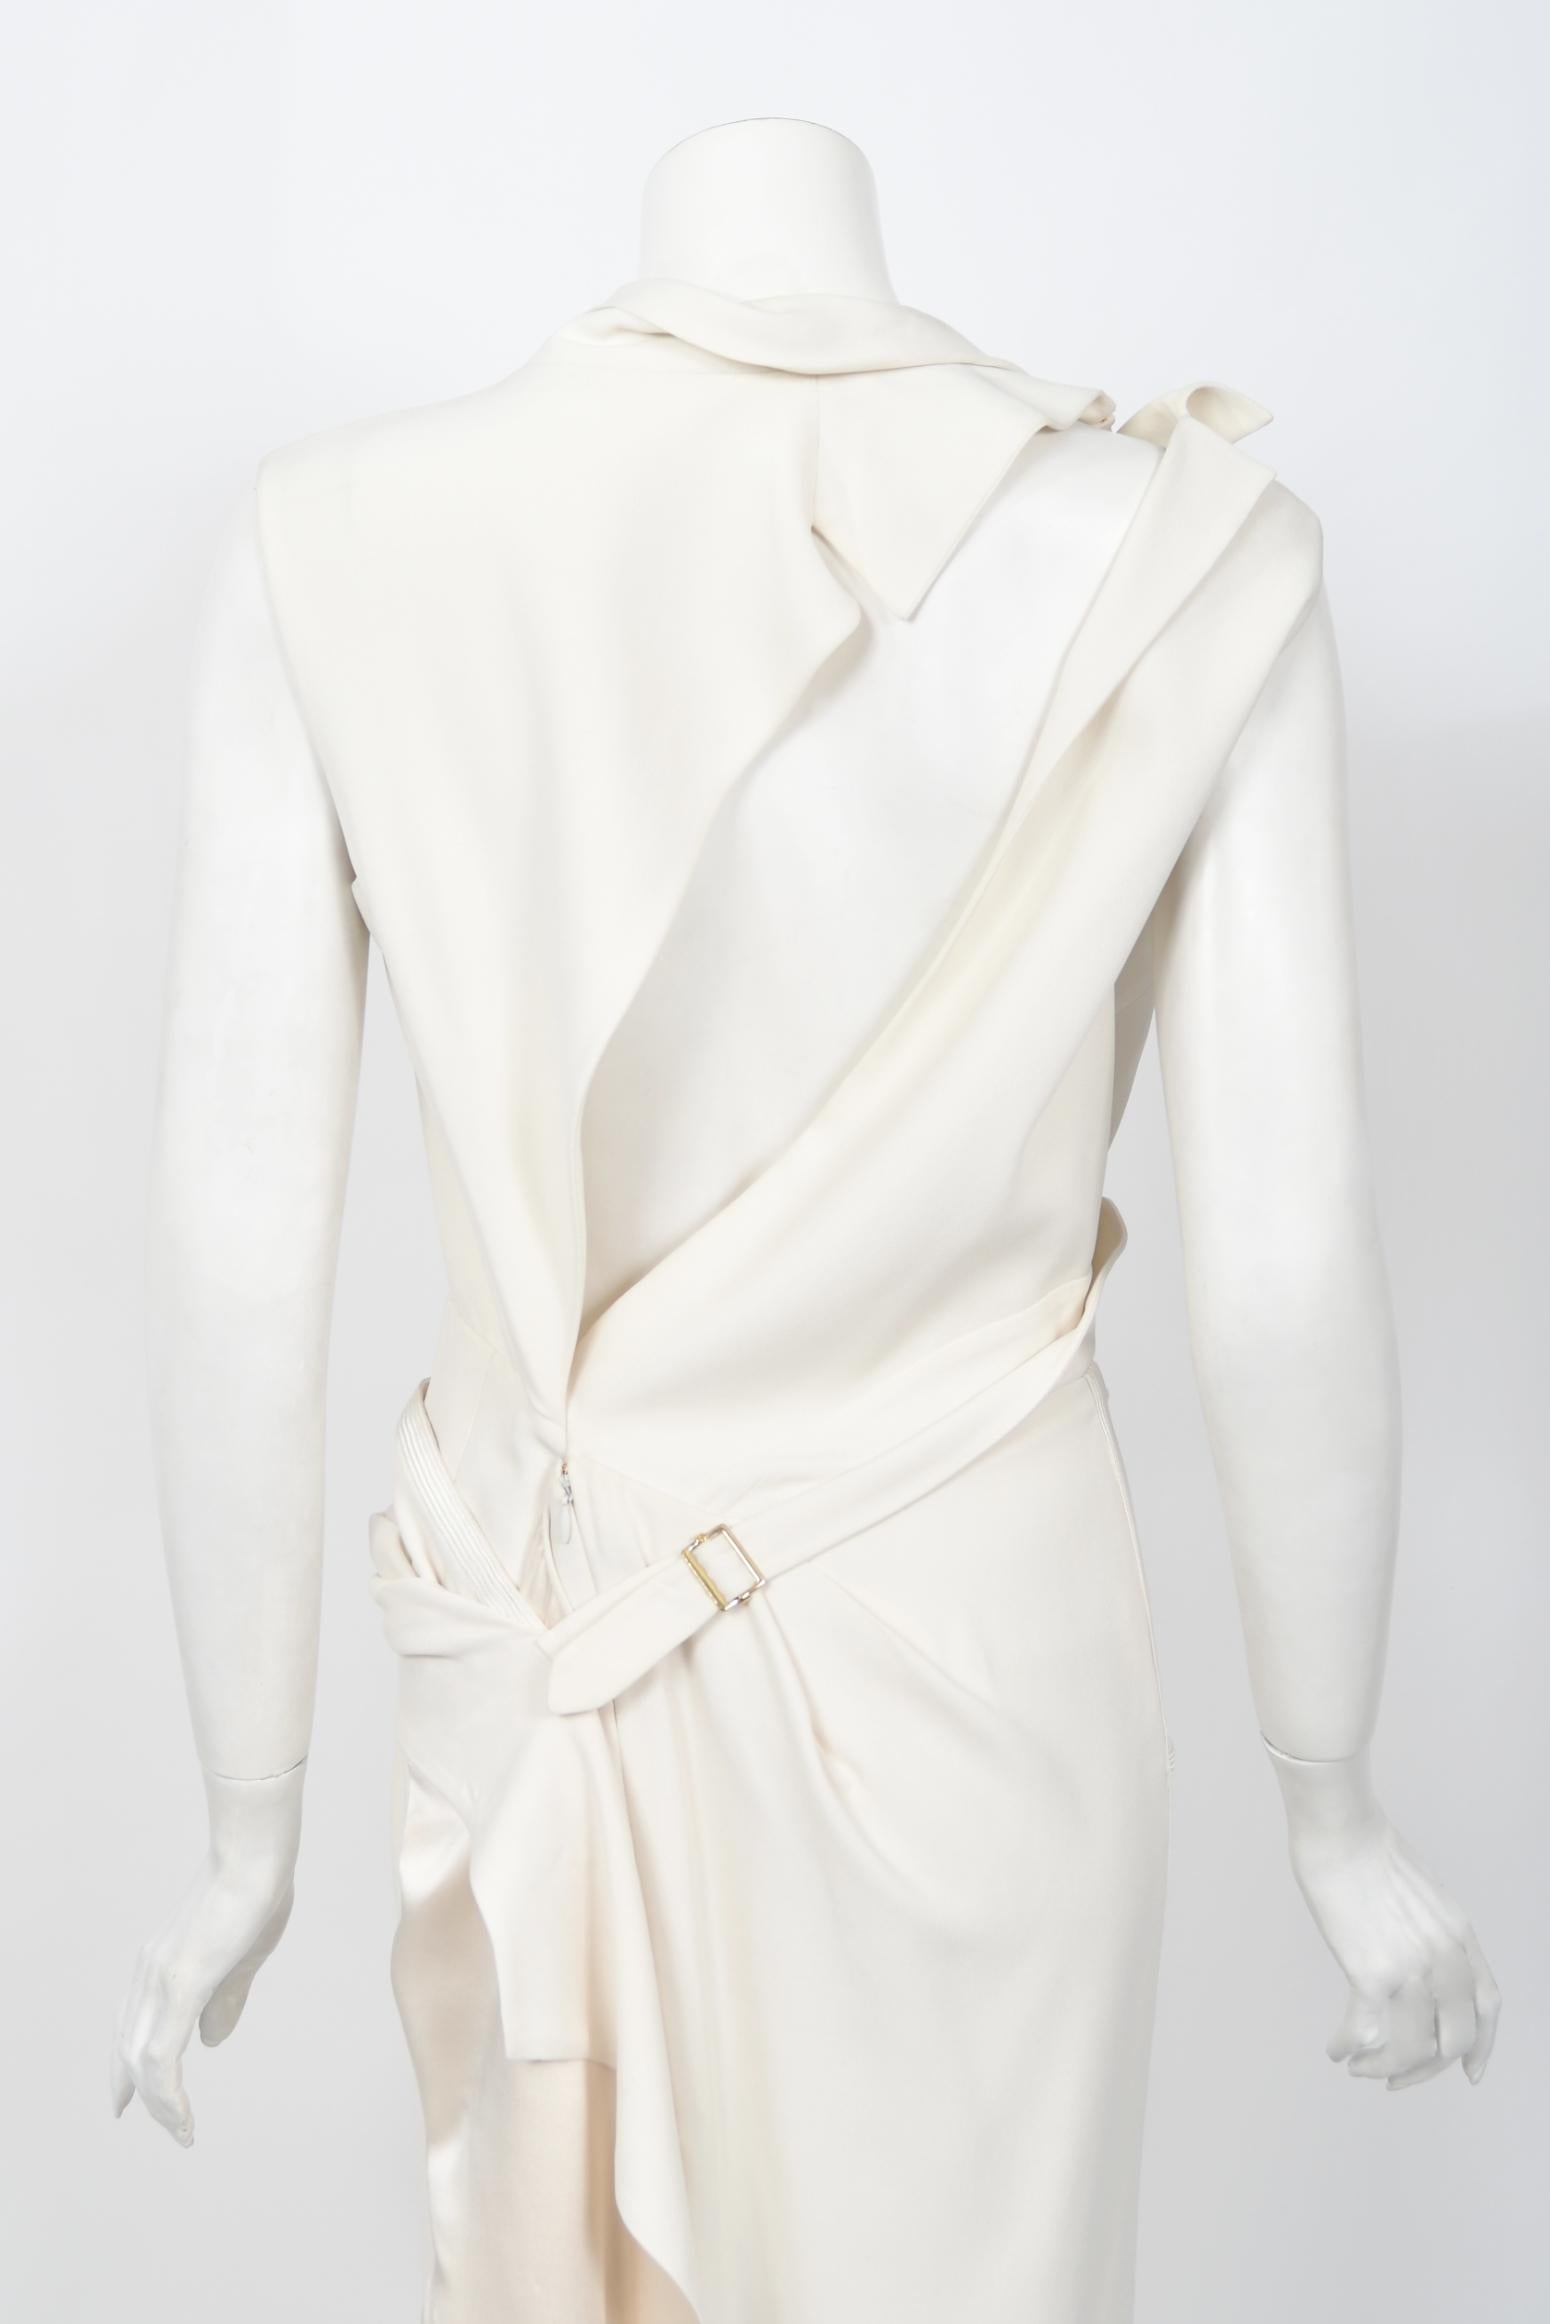 2000 Christian Dior by John Galliano Ivory Crepe Cut-Out Asymmetric Draped Dress 15